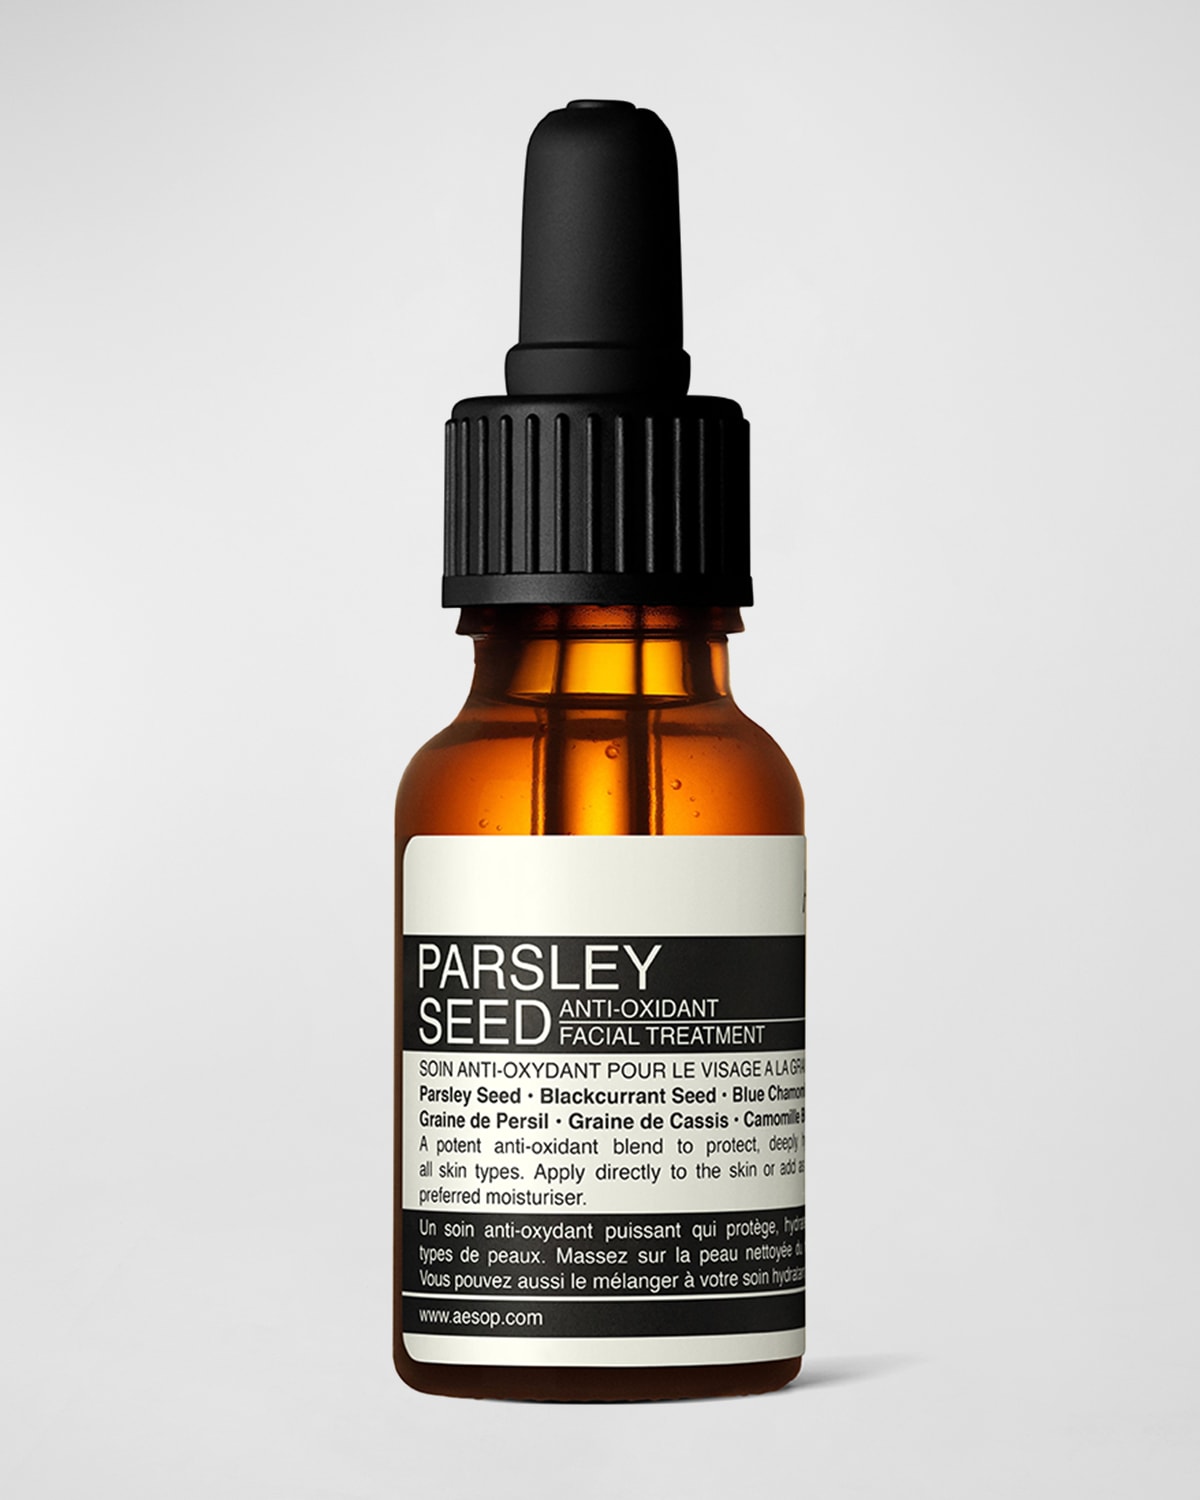 Parsley Seed Anti-Oxidant Facial Treatment, 0.5 oz.